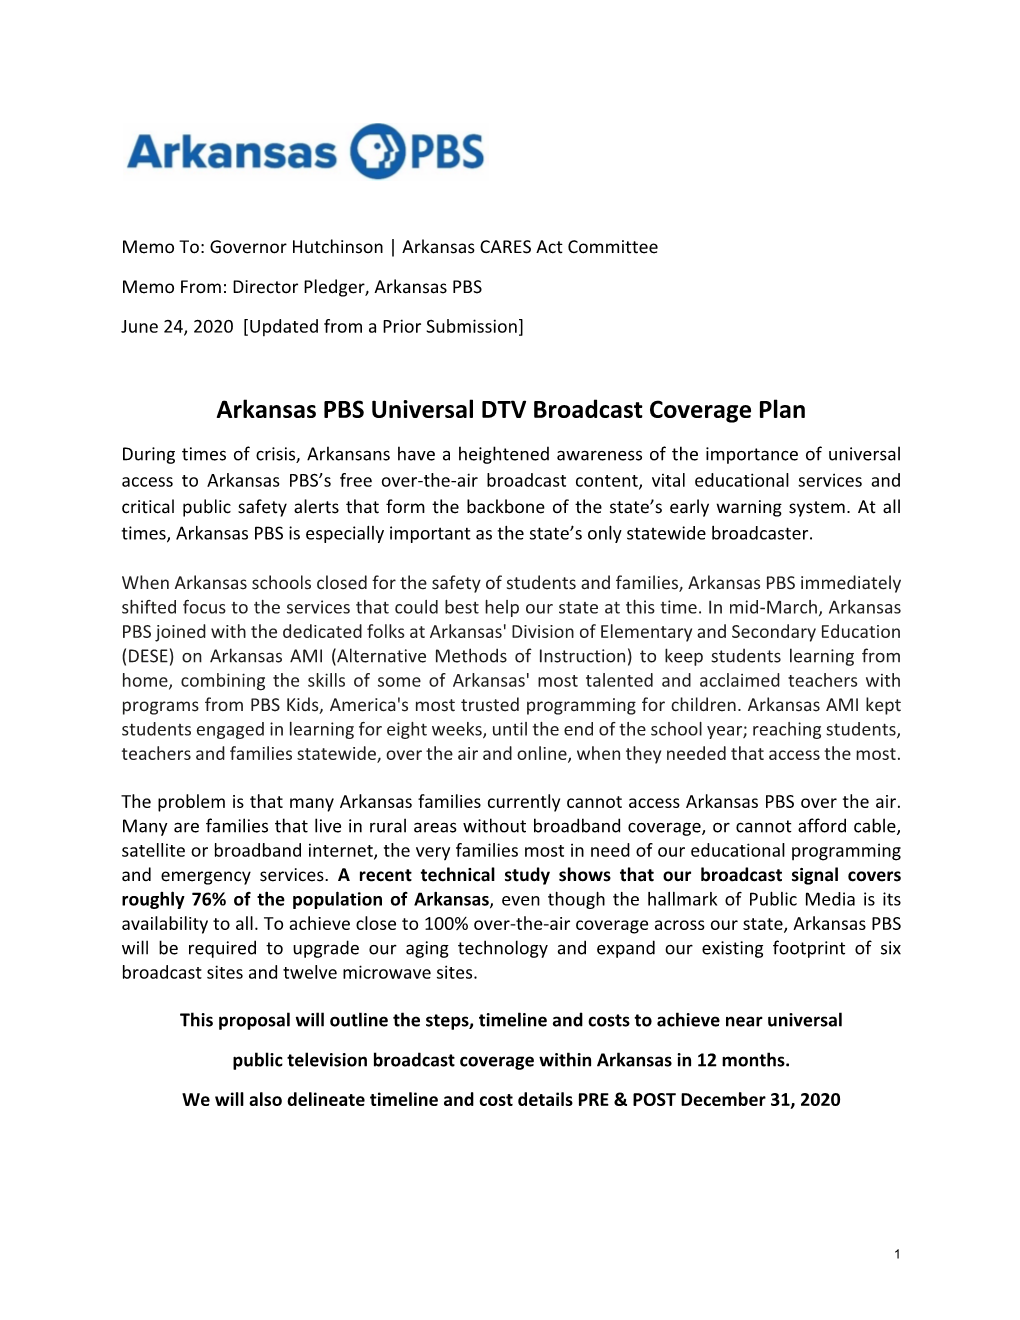 Arkansas PBS Universal DTV Broadcast Coverage Plan